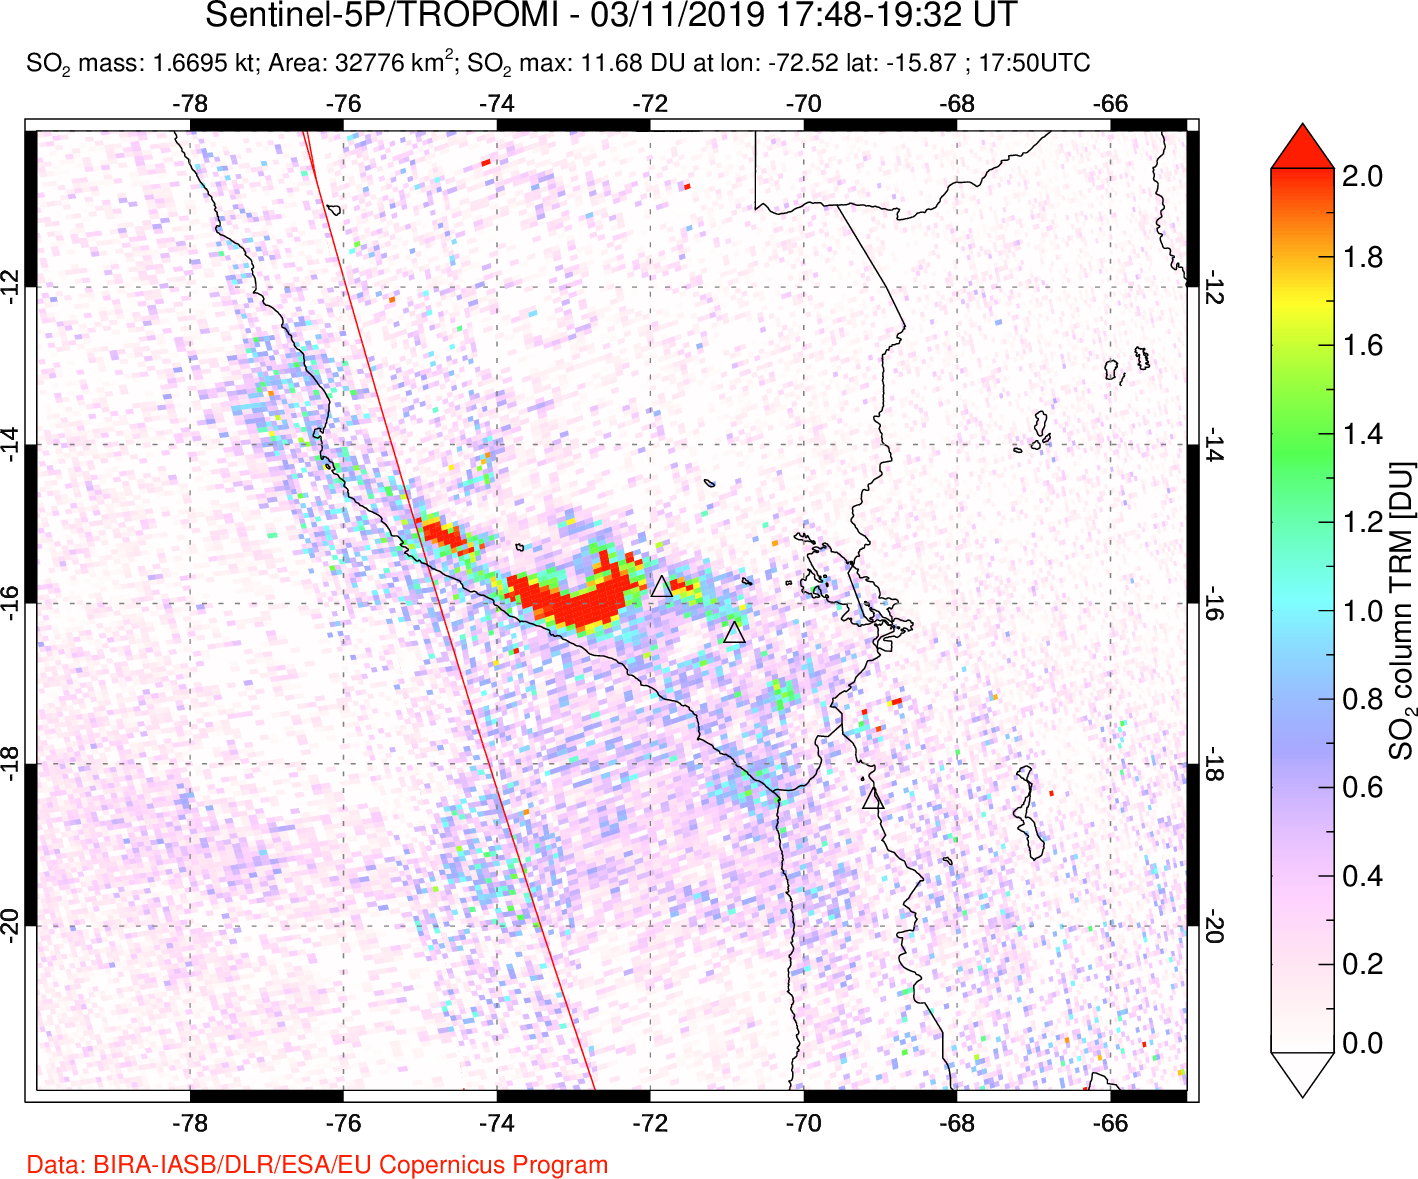 A sulfur dioxide image over Peru on Mar 11, 2019.